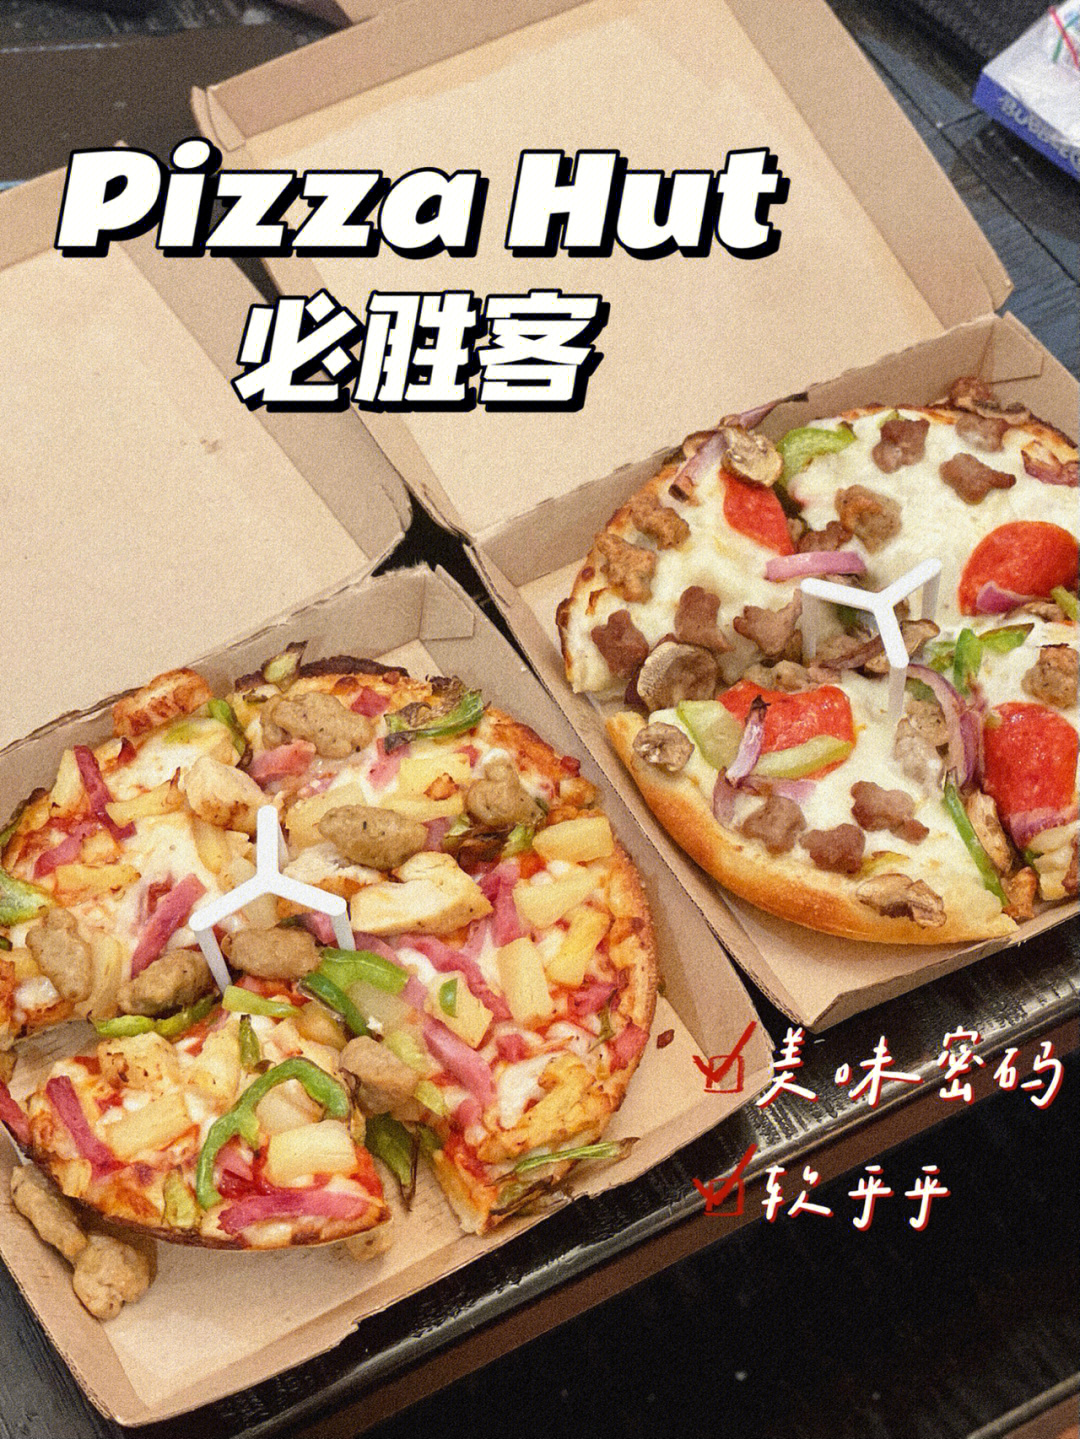 pizza hut philippines图片